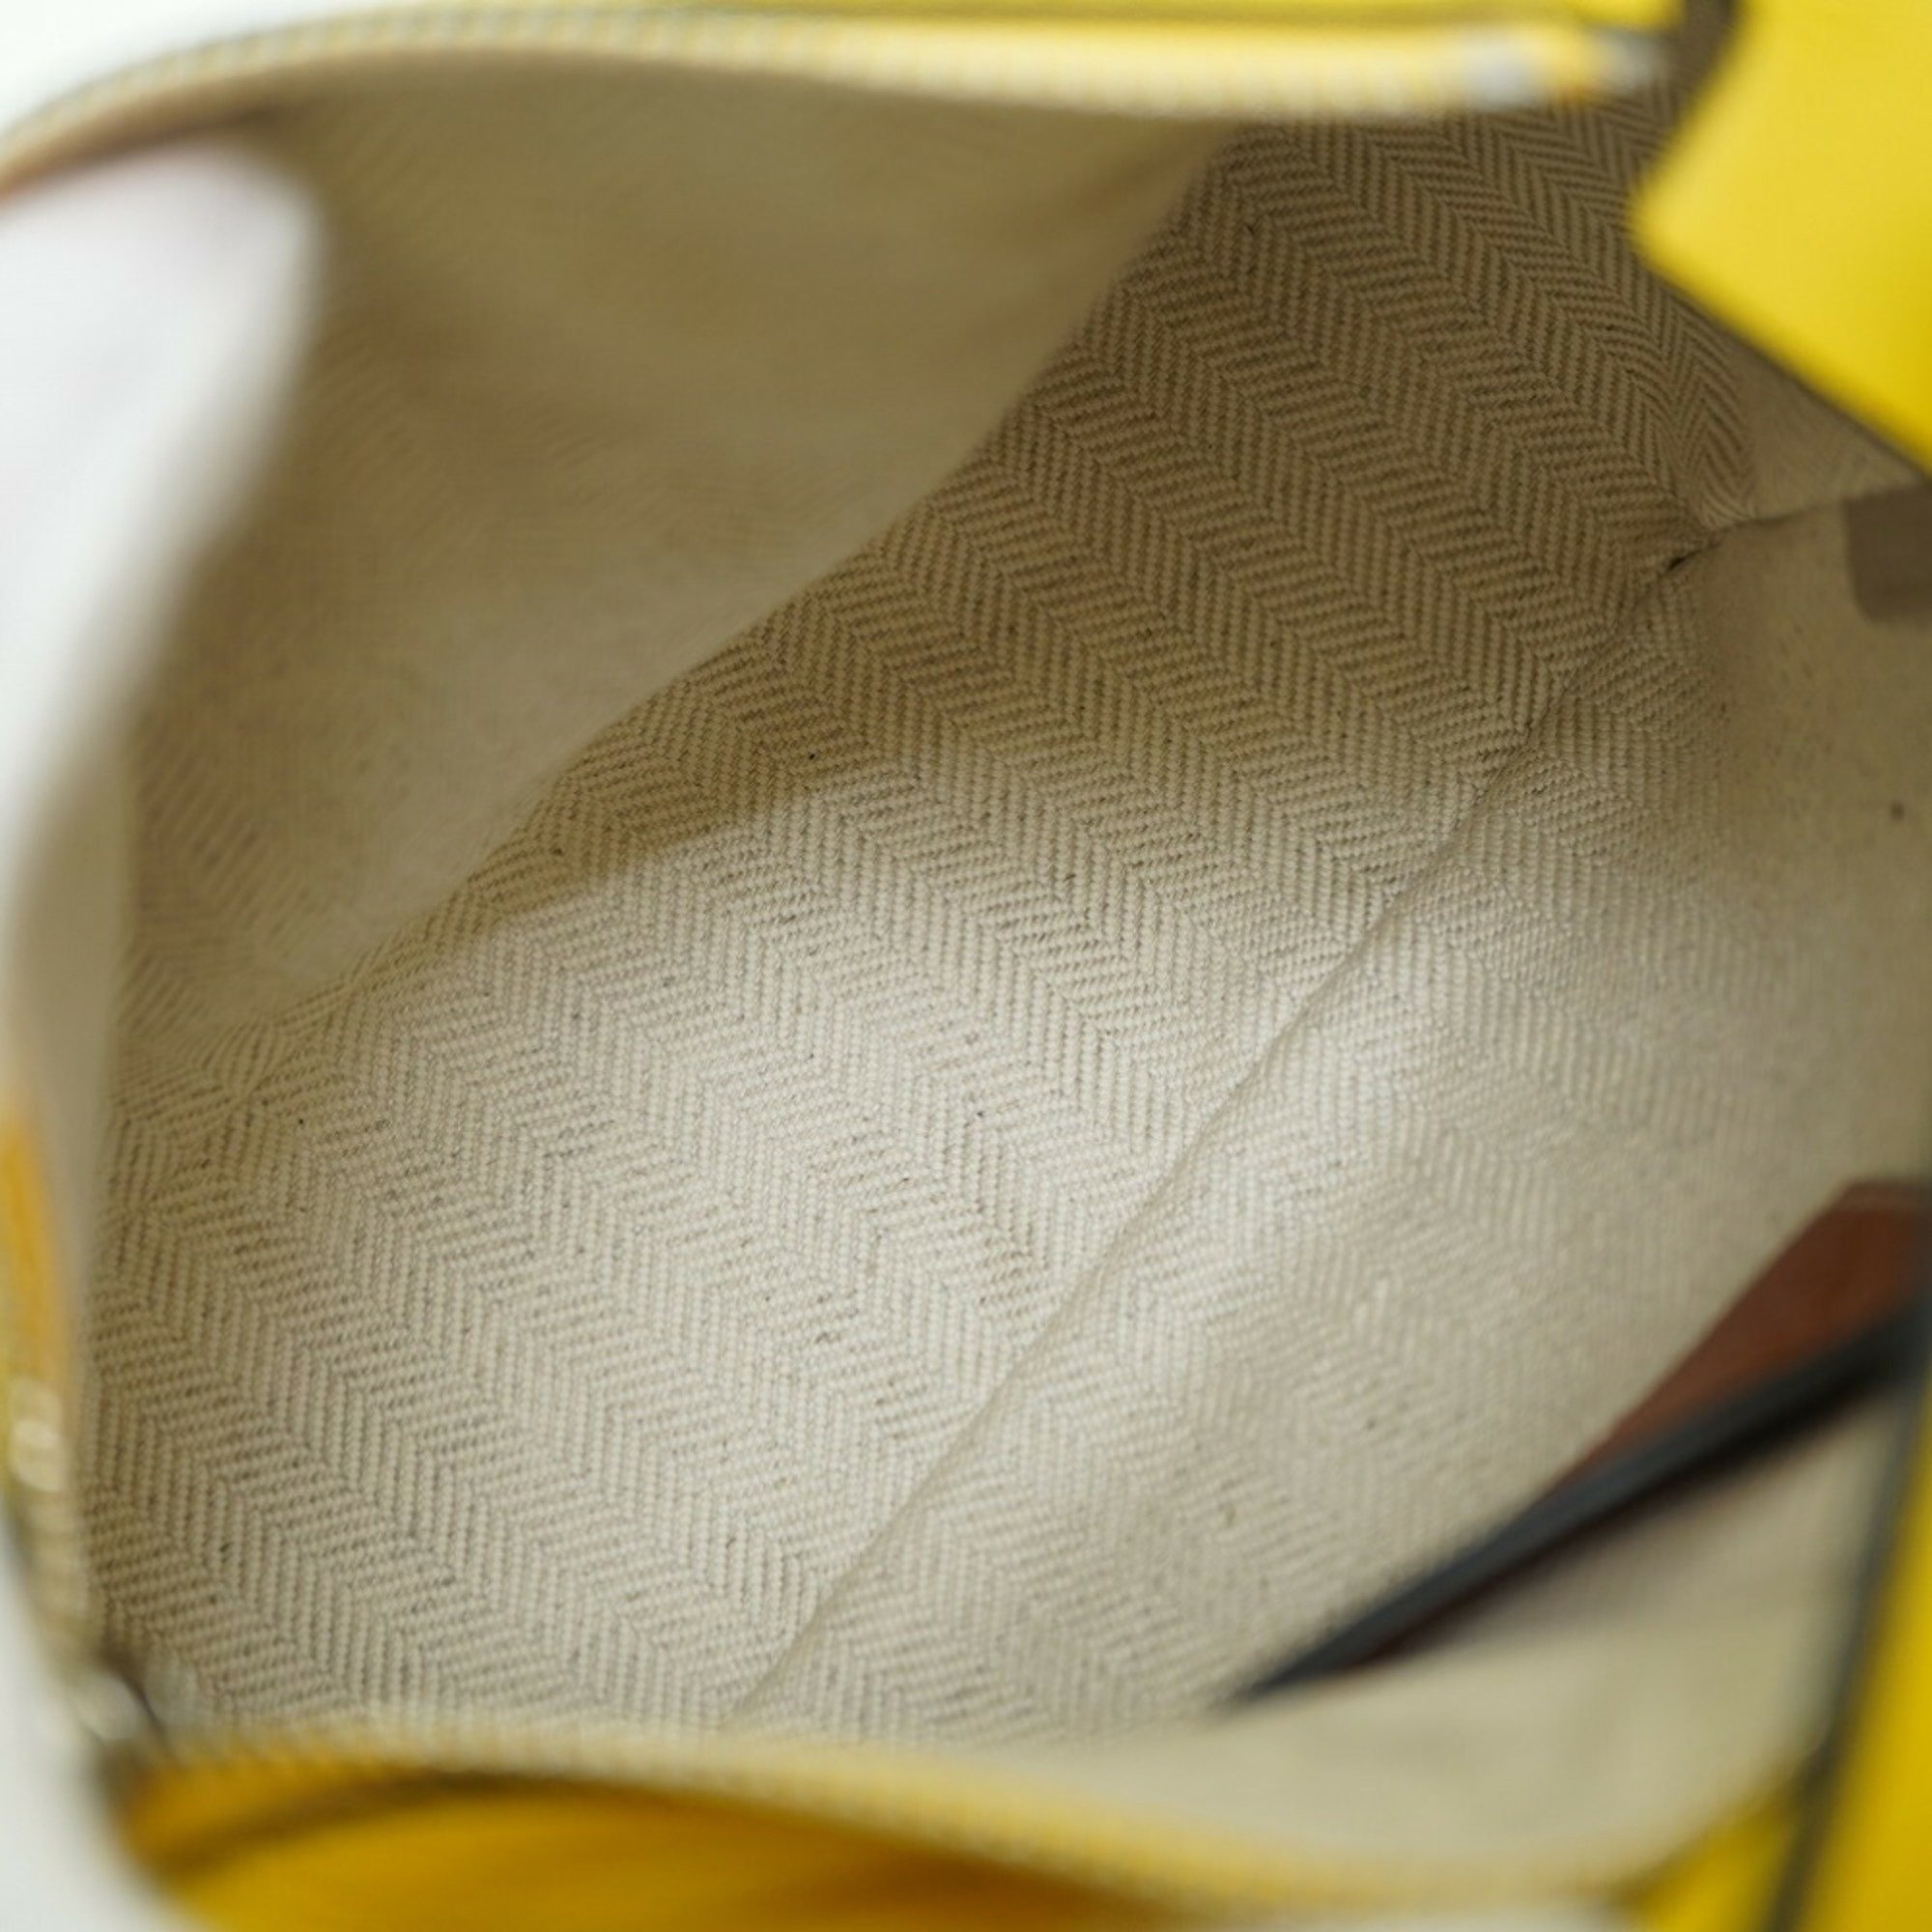 LOEWE Ghibli My Neighbor Totoro Puzzle Bag Shoulder Handbag Leather Yellow 0041LOEWE with Strap